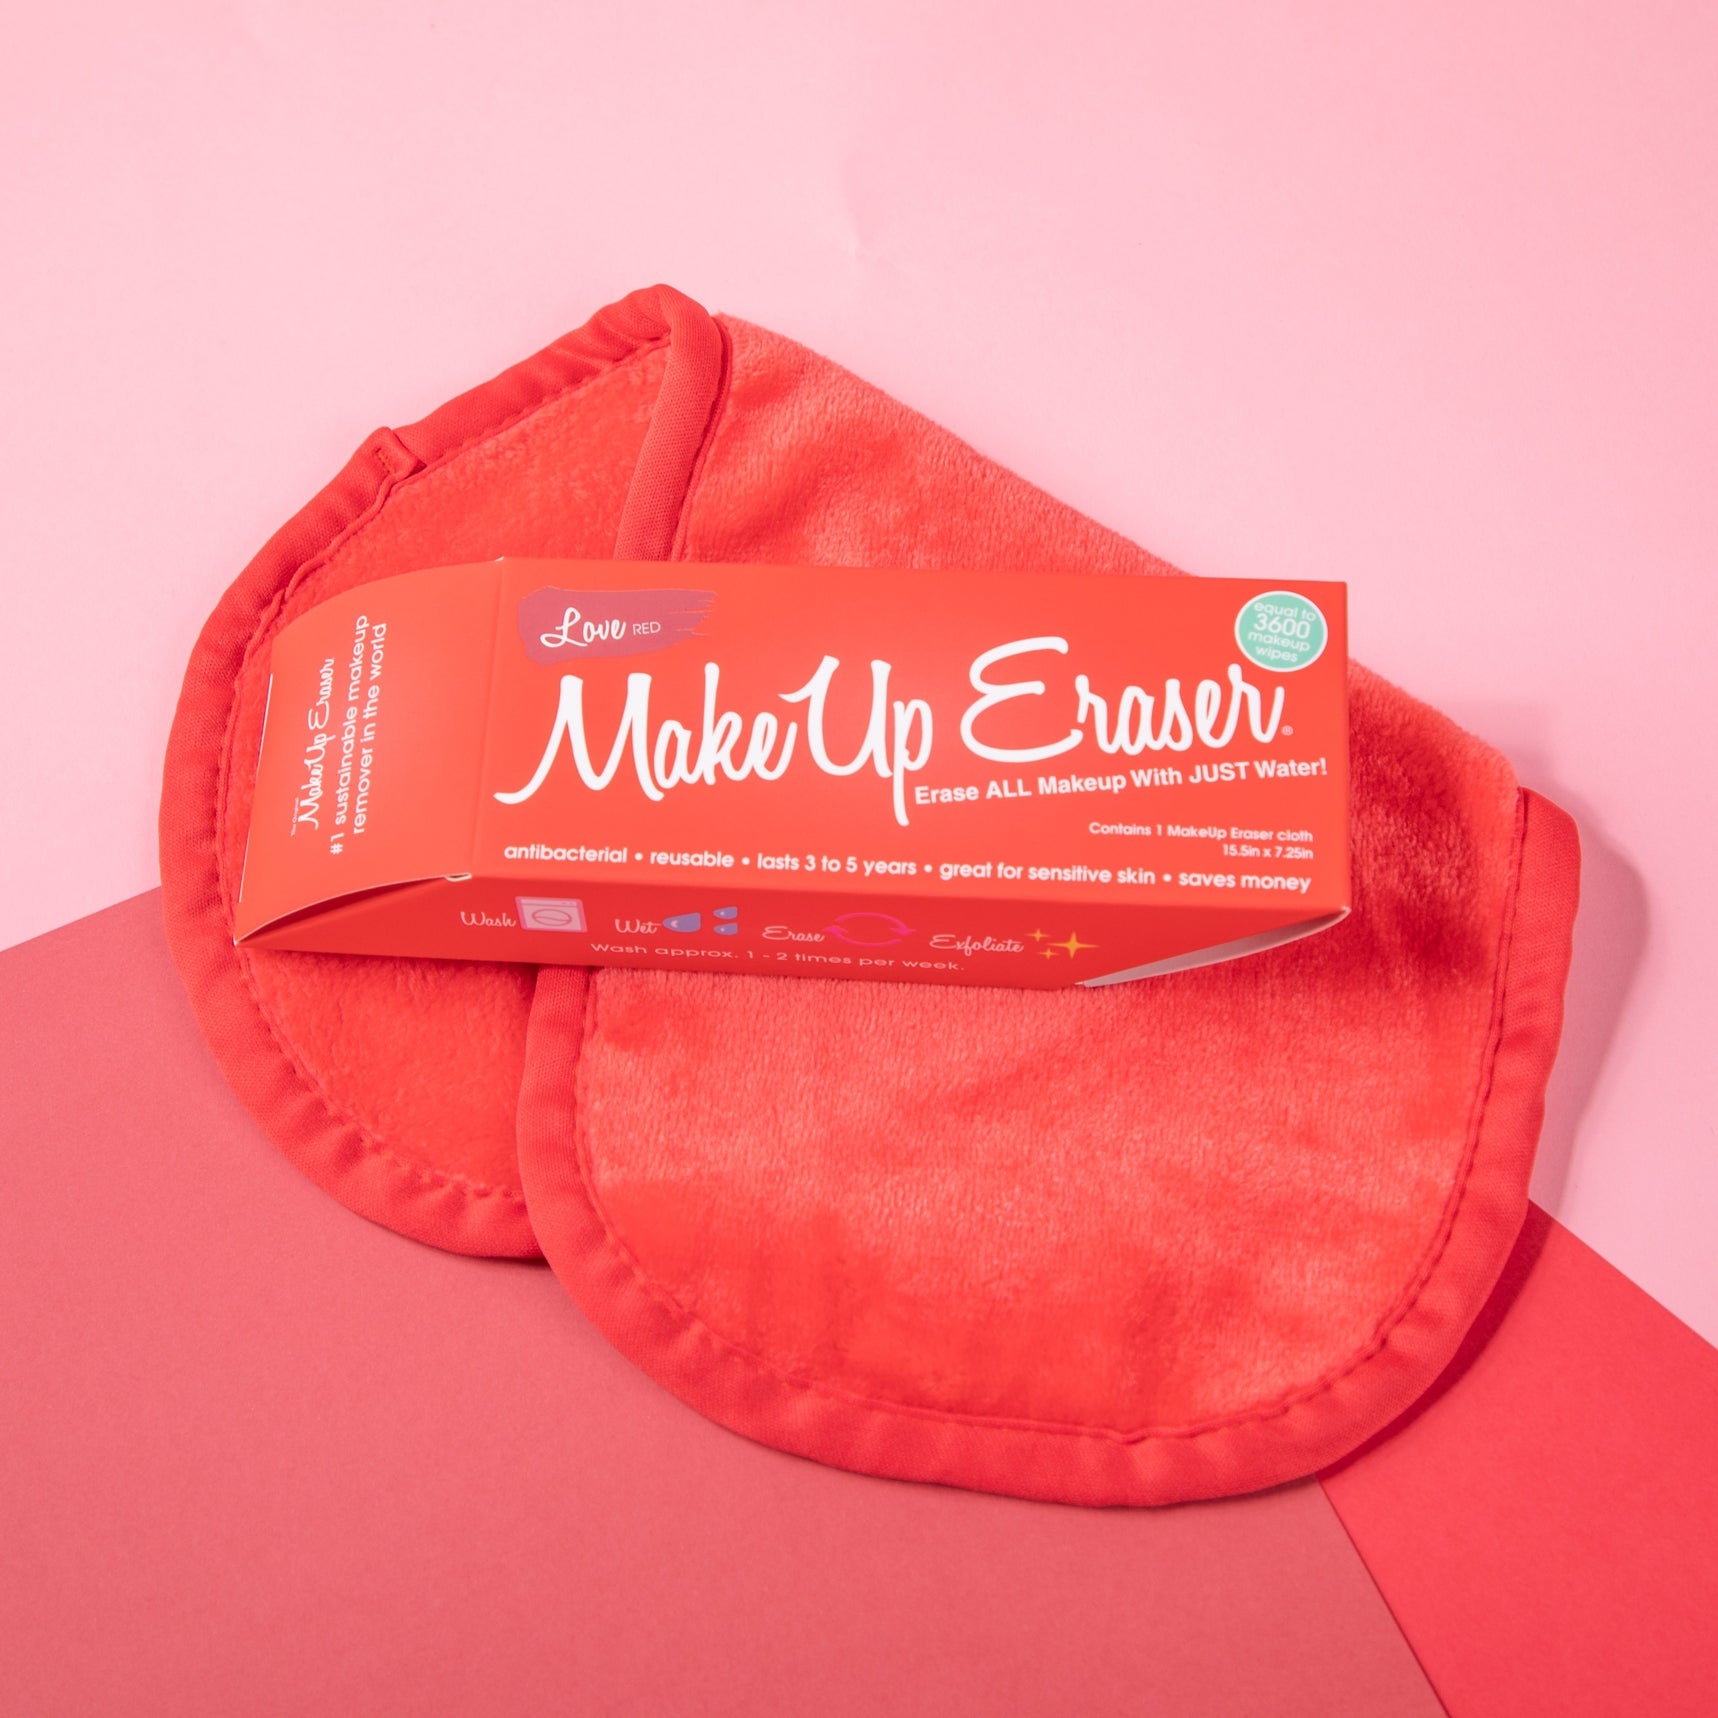 The Original Makeup Eraser in Red